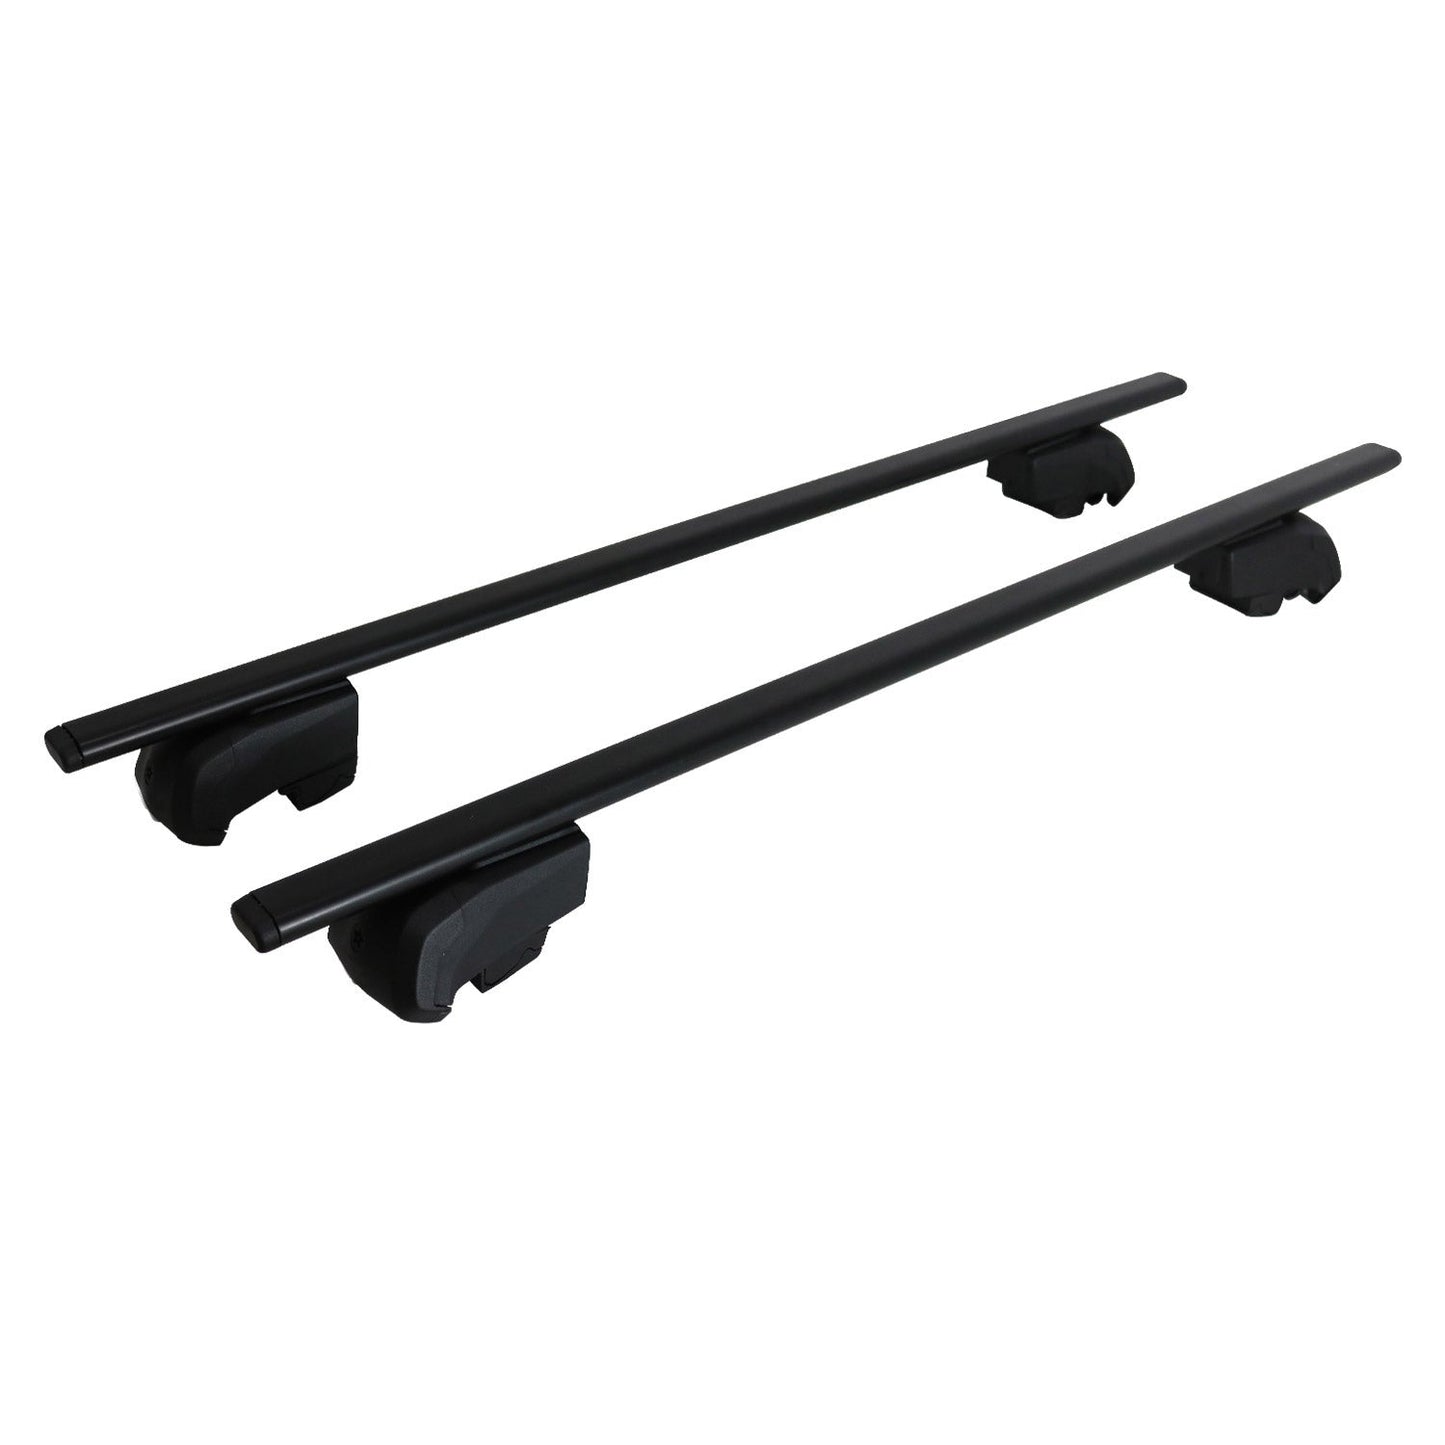 OMAC Roof Racks Luggage Carrier Cross Bars Iron for Toyota bZ4X 2023-2024 Black 2Pcs G003063